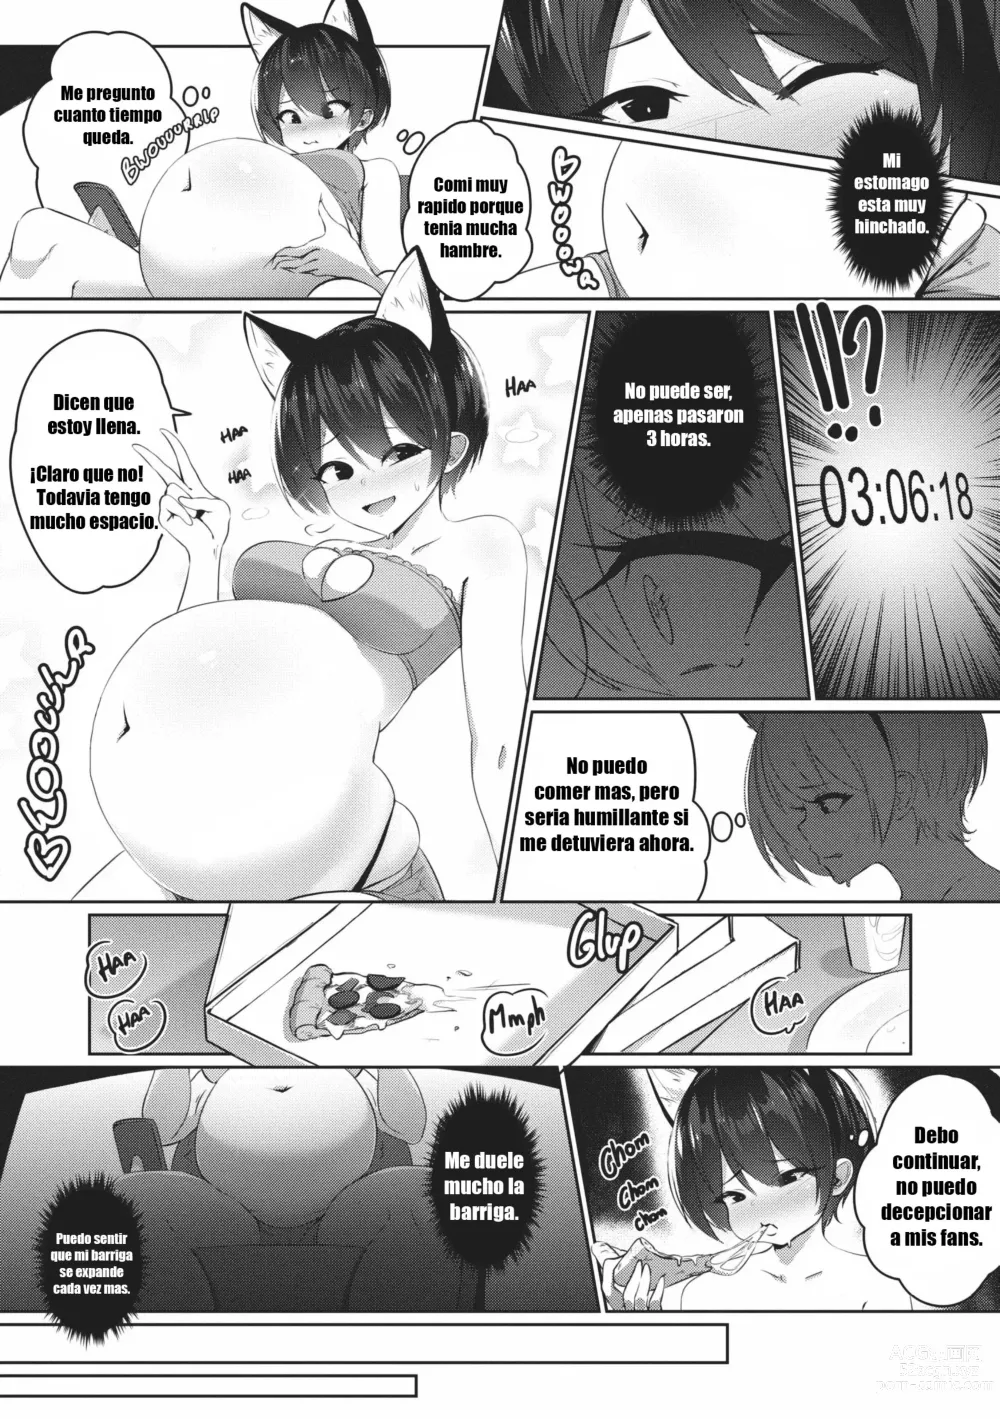 Page 4 of doujinshi 24H NONSTOP EATING.